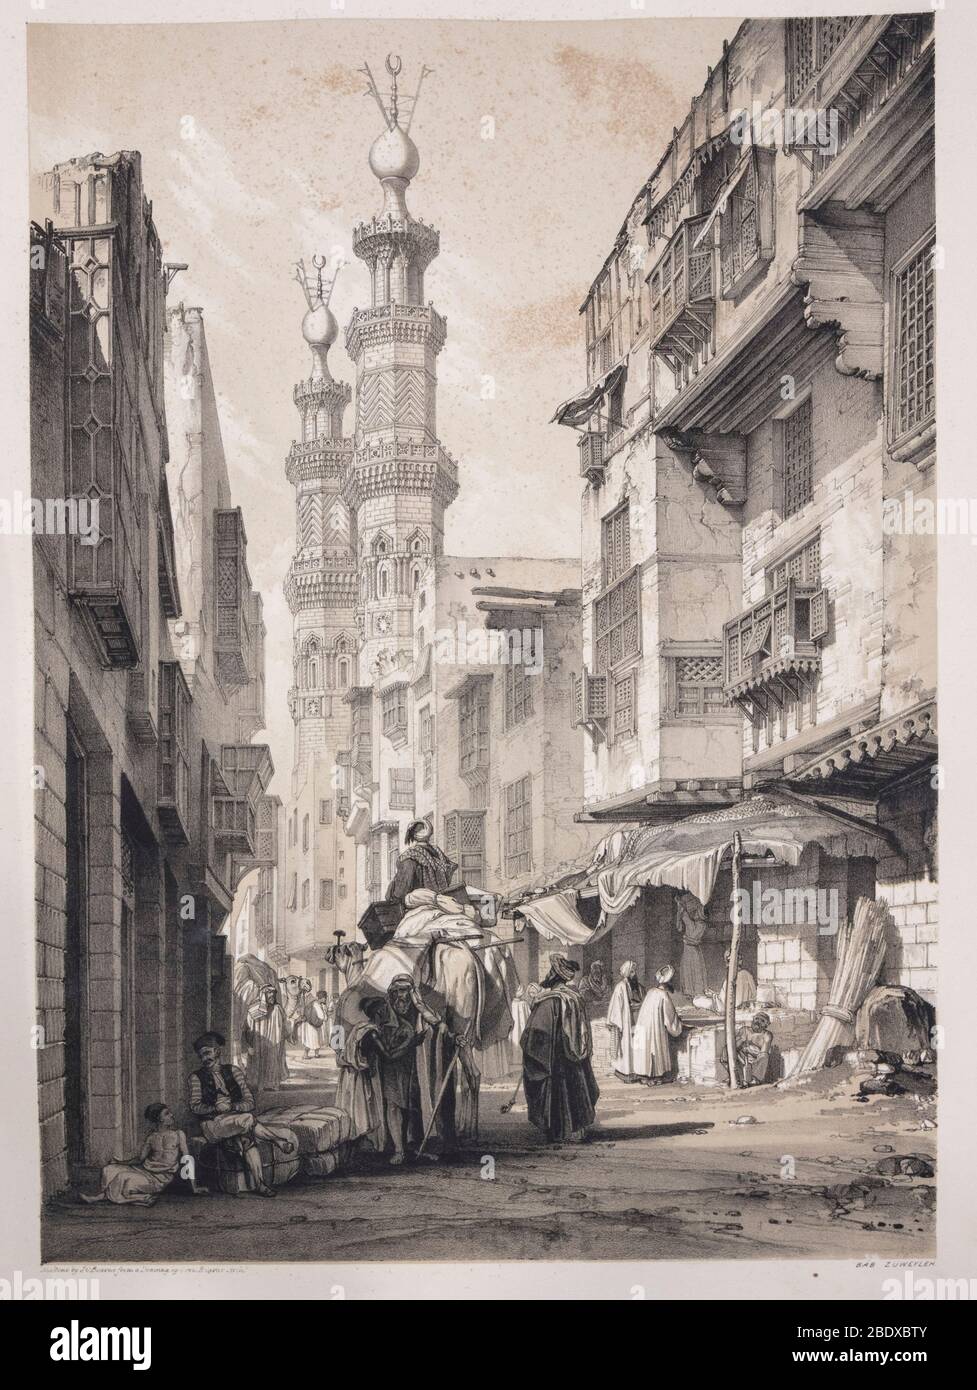 Minarets de la mosquée d'al-Mu'ayyad à Bab Zuwaila, Robert Hay, illustrations du Caire, Londres, 1840 Banque D'Images